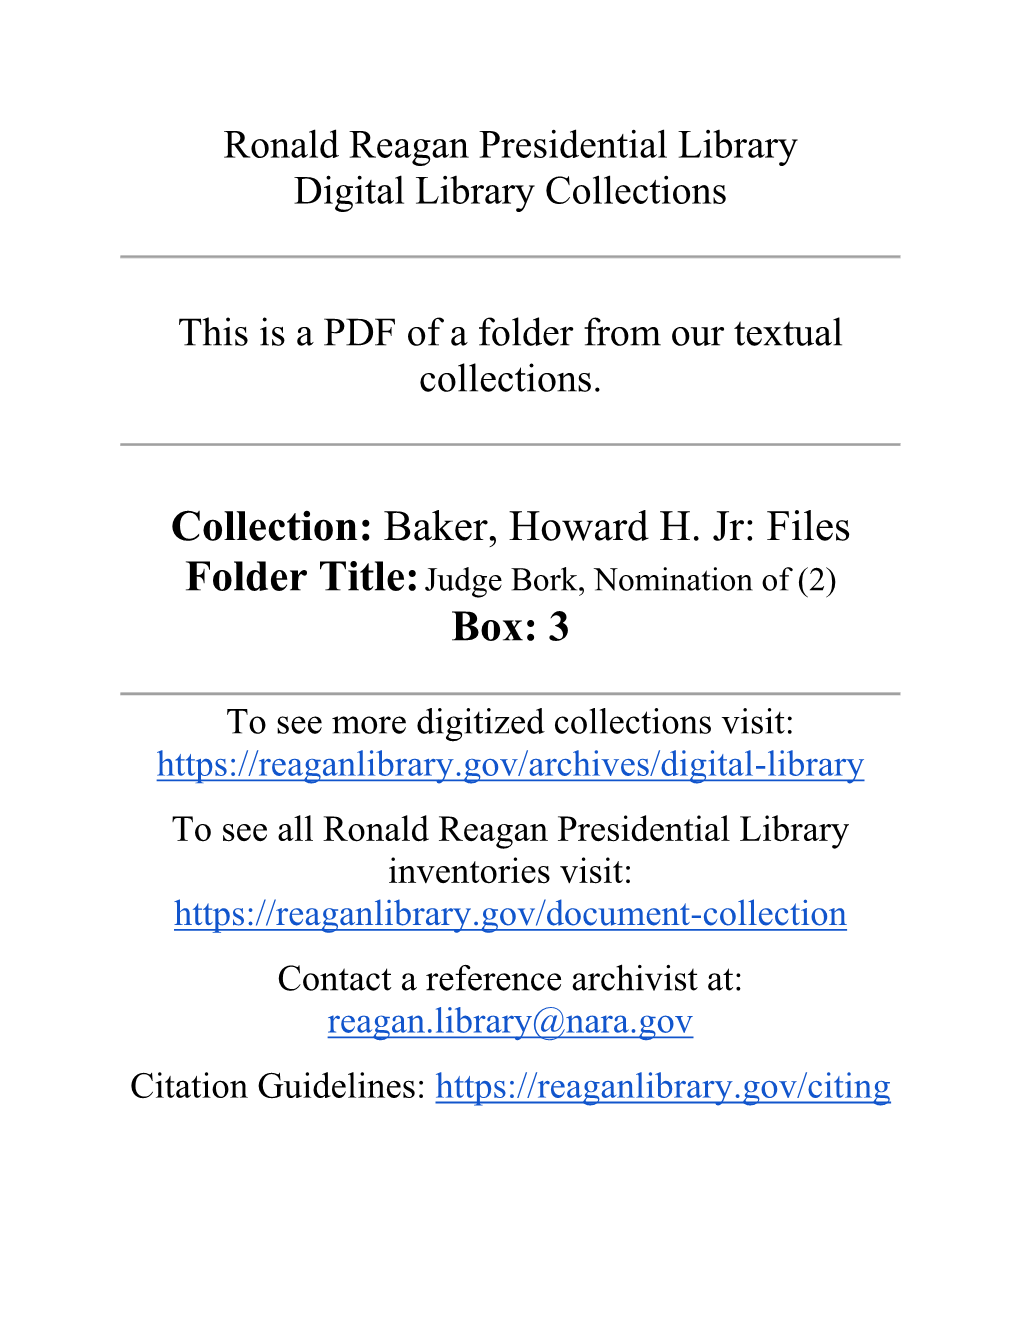 Howard Baker Files: Series I Subject File: Box 3: Folder 13 Judge Bork